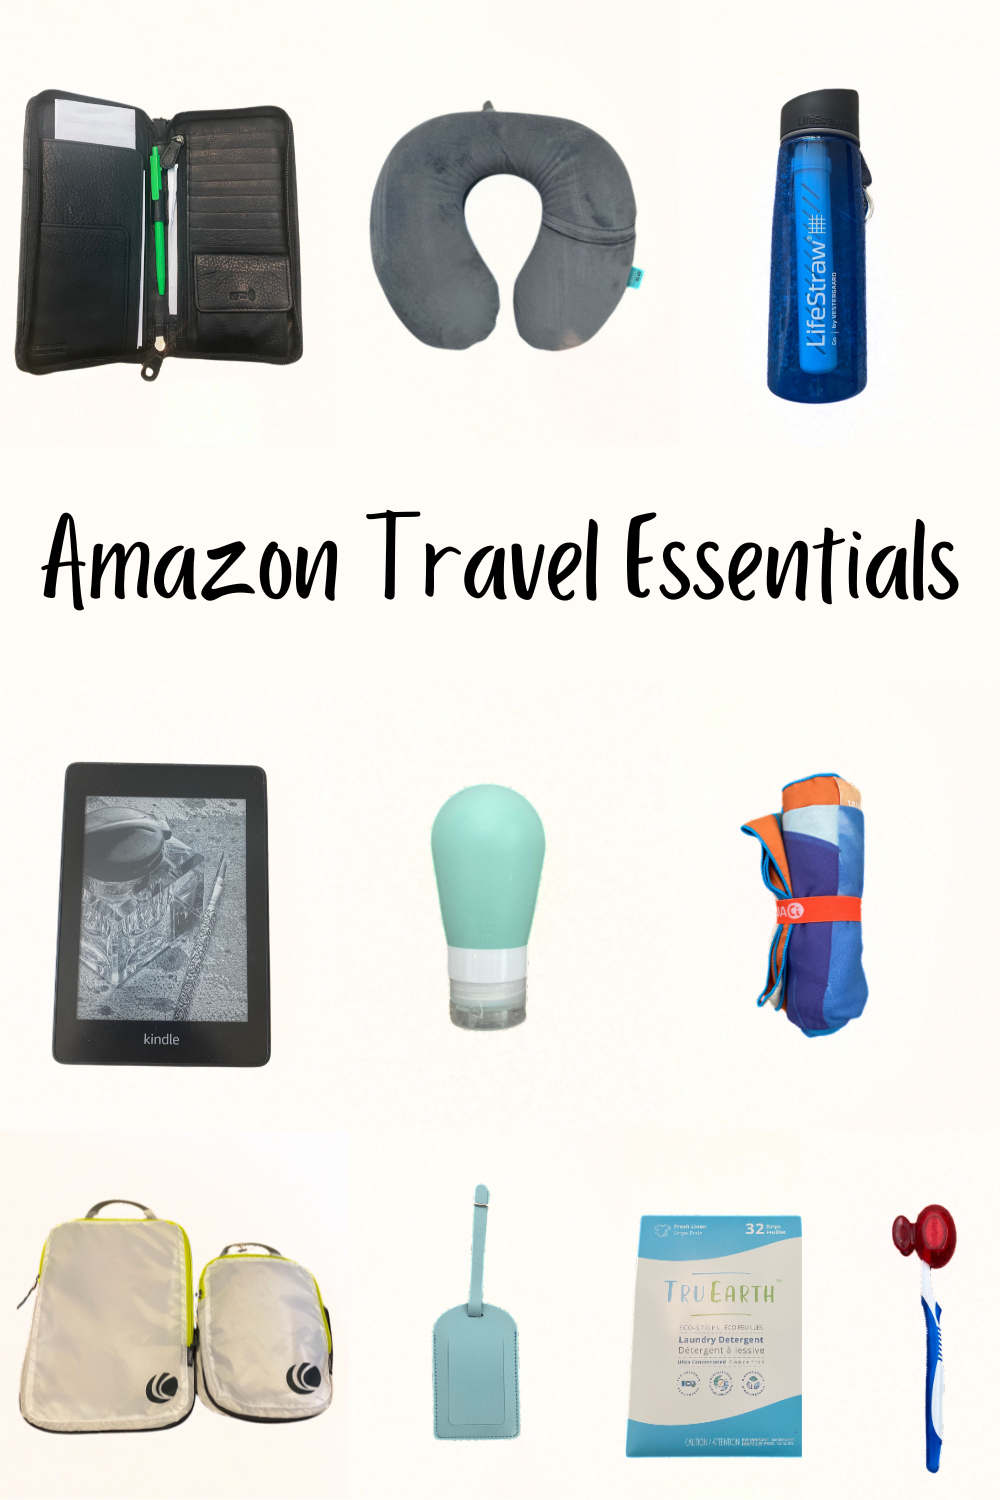 Amazon travel essentials